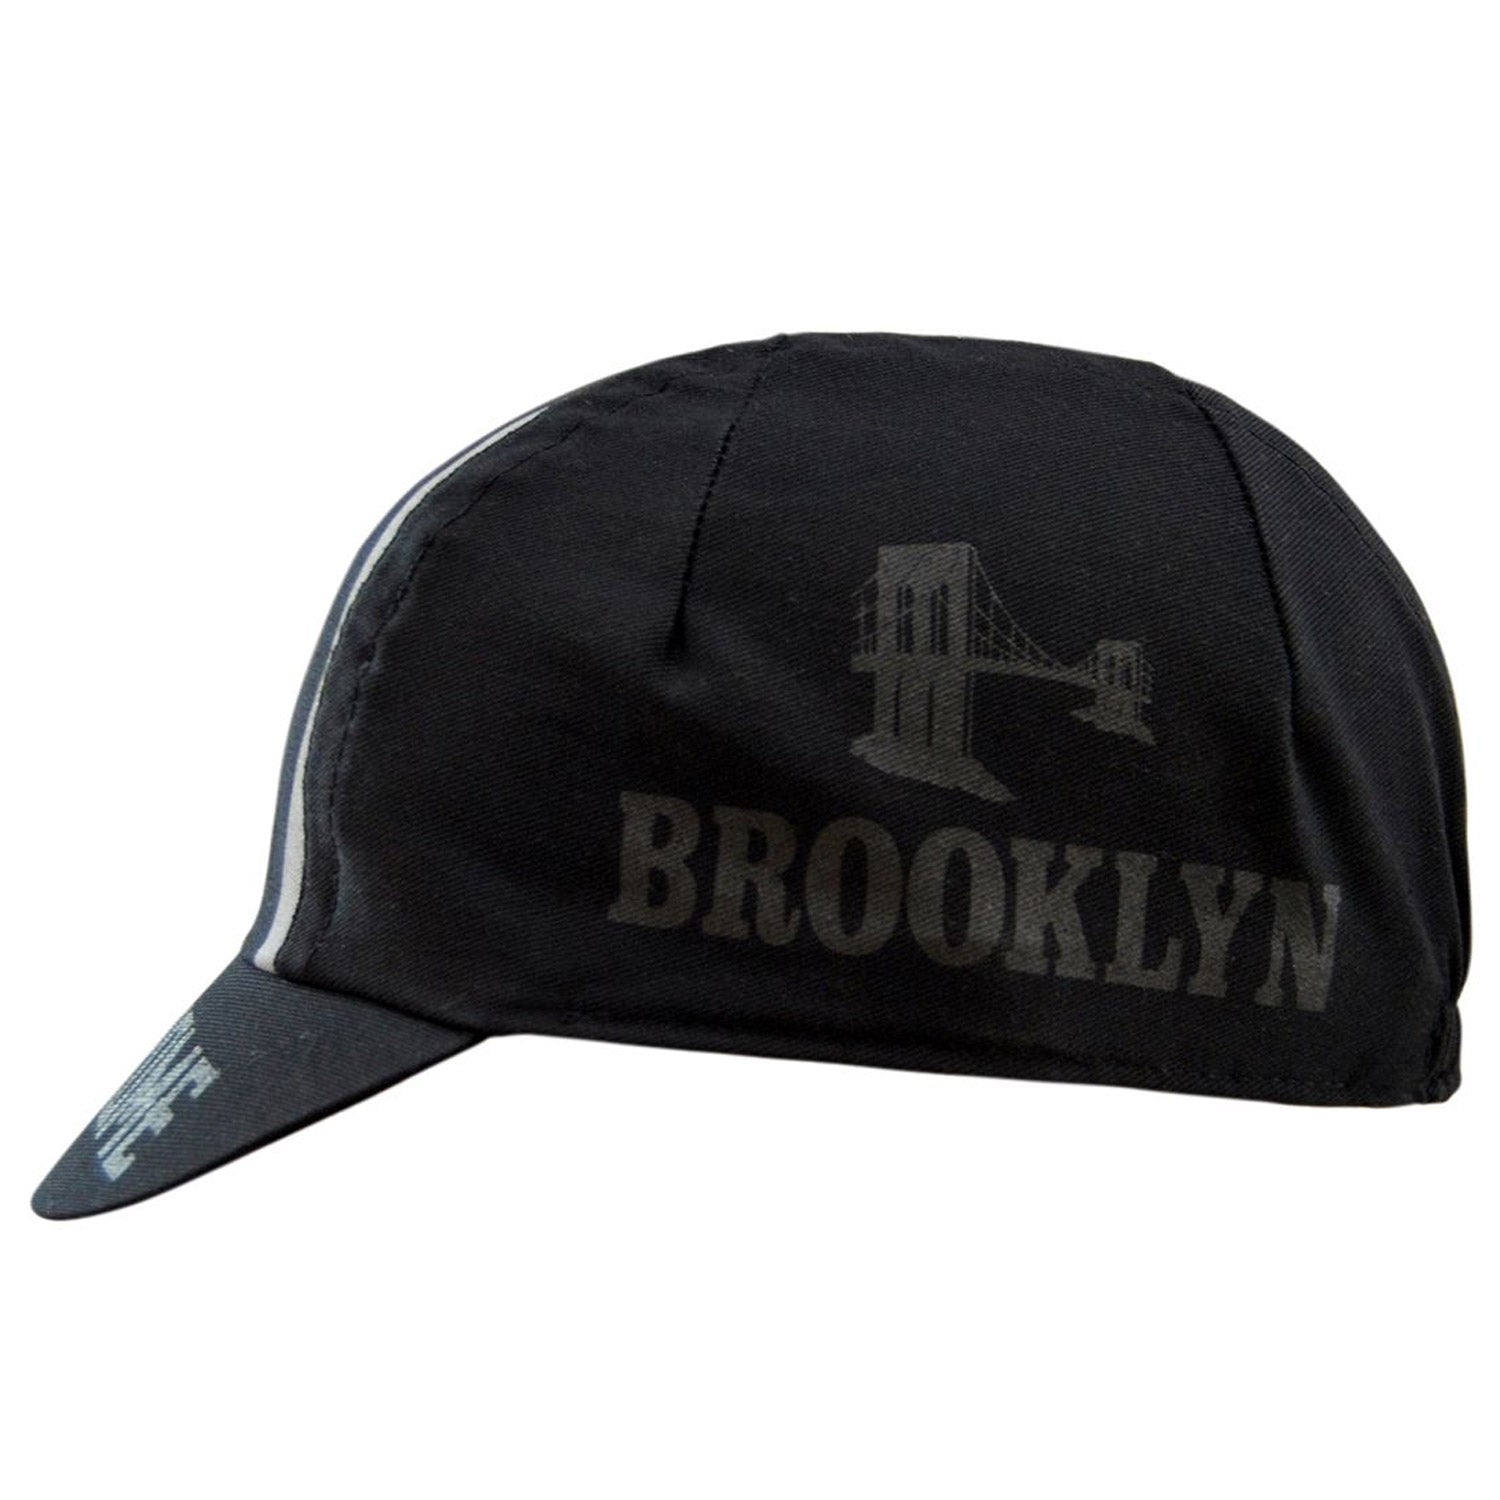 Casquette Headdy Brooklyn - Chrome